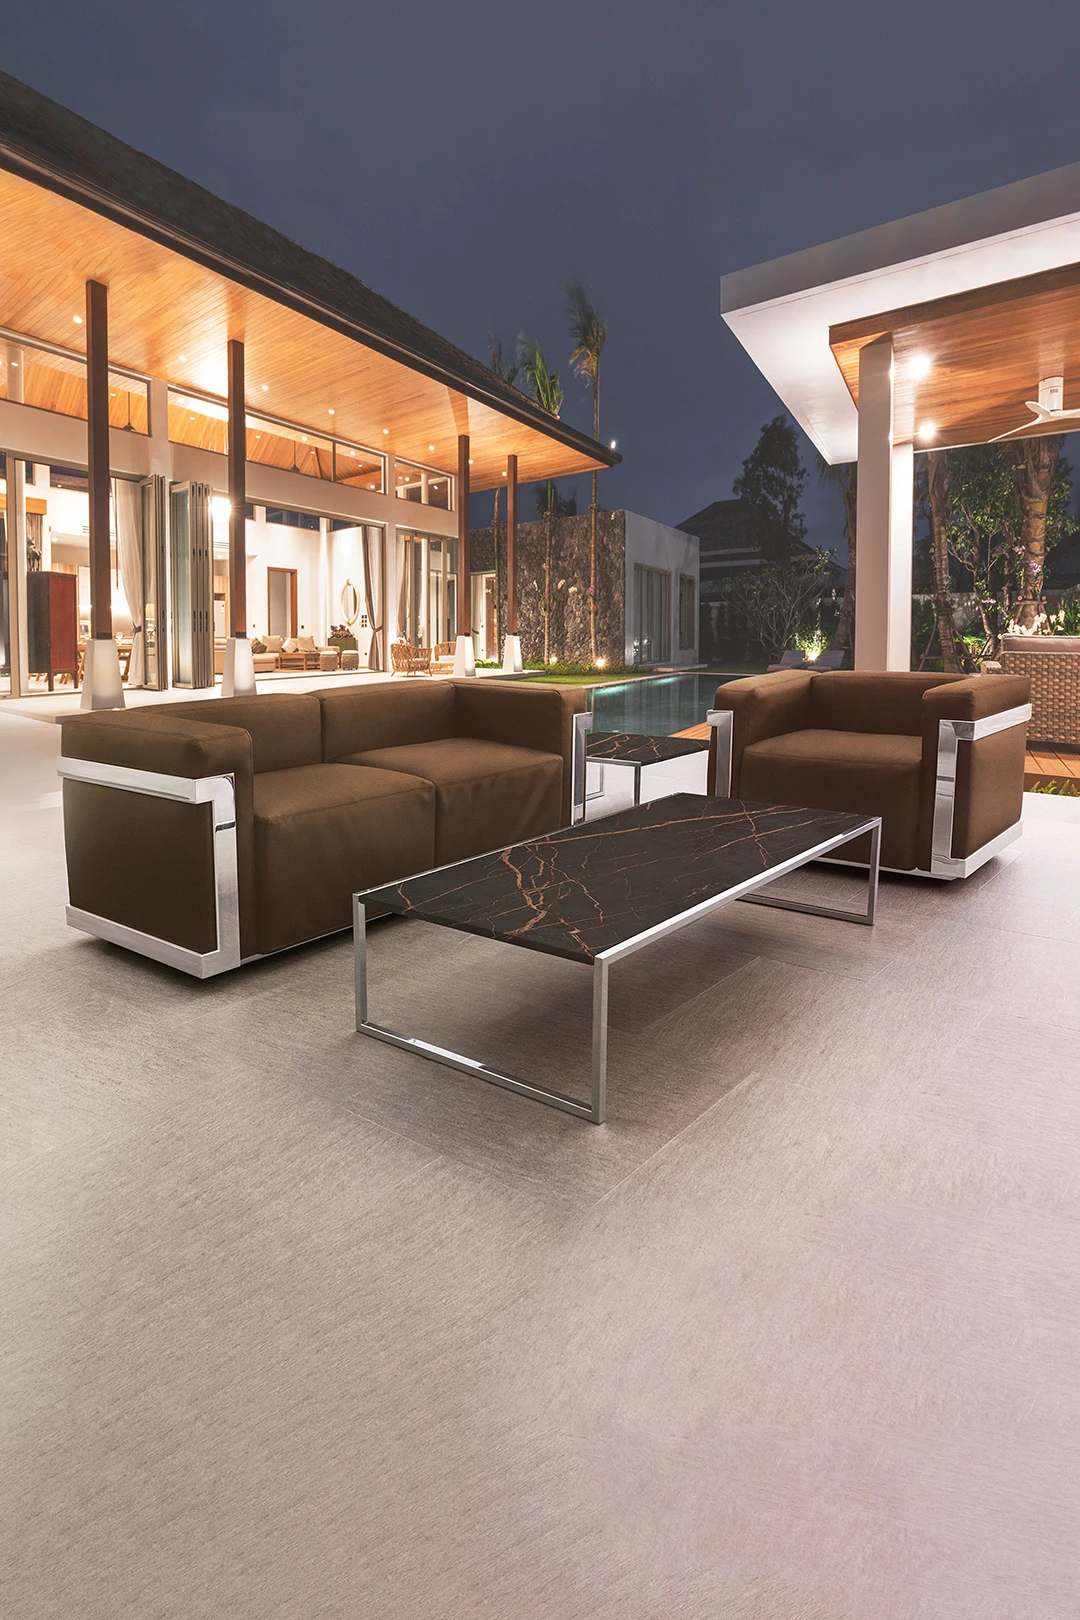 modular outdoor seating